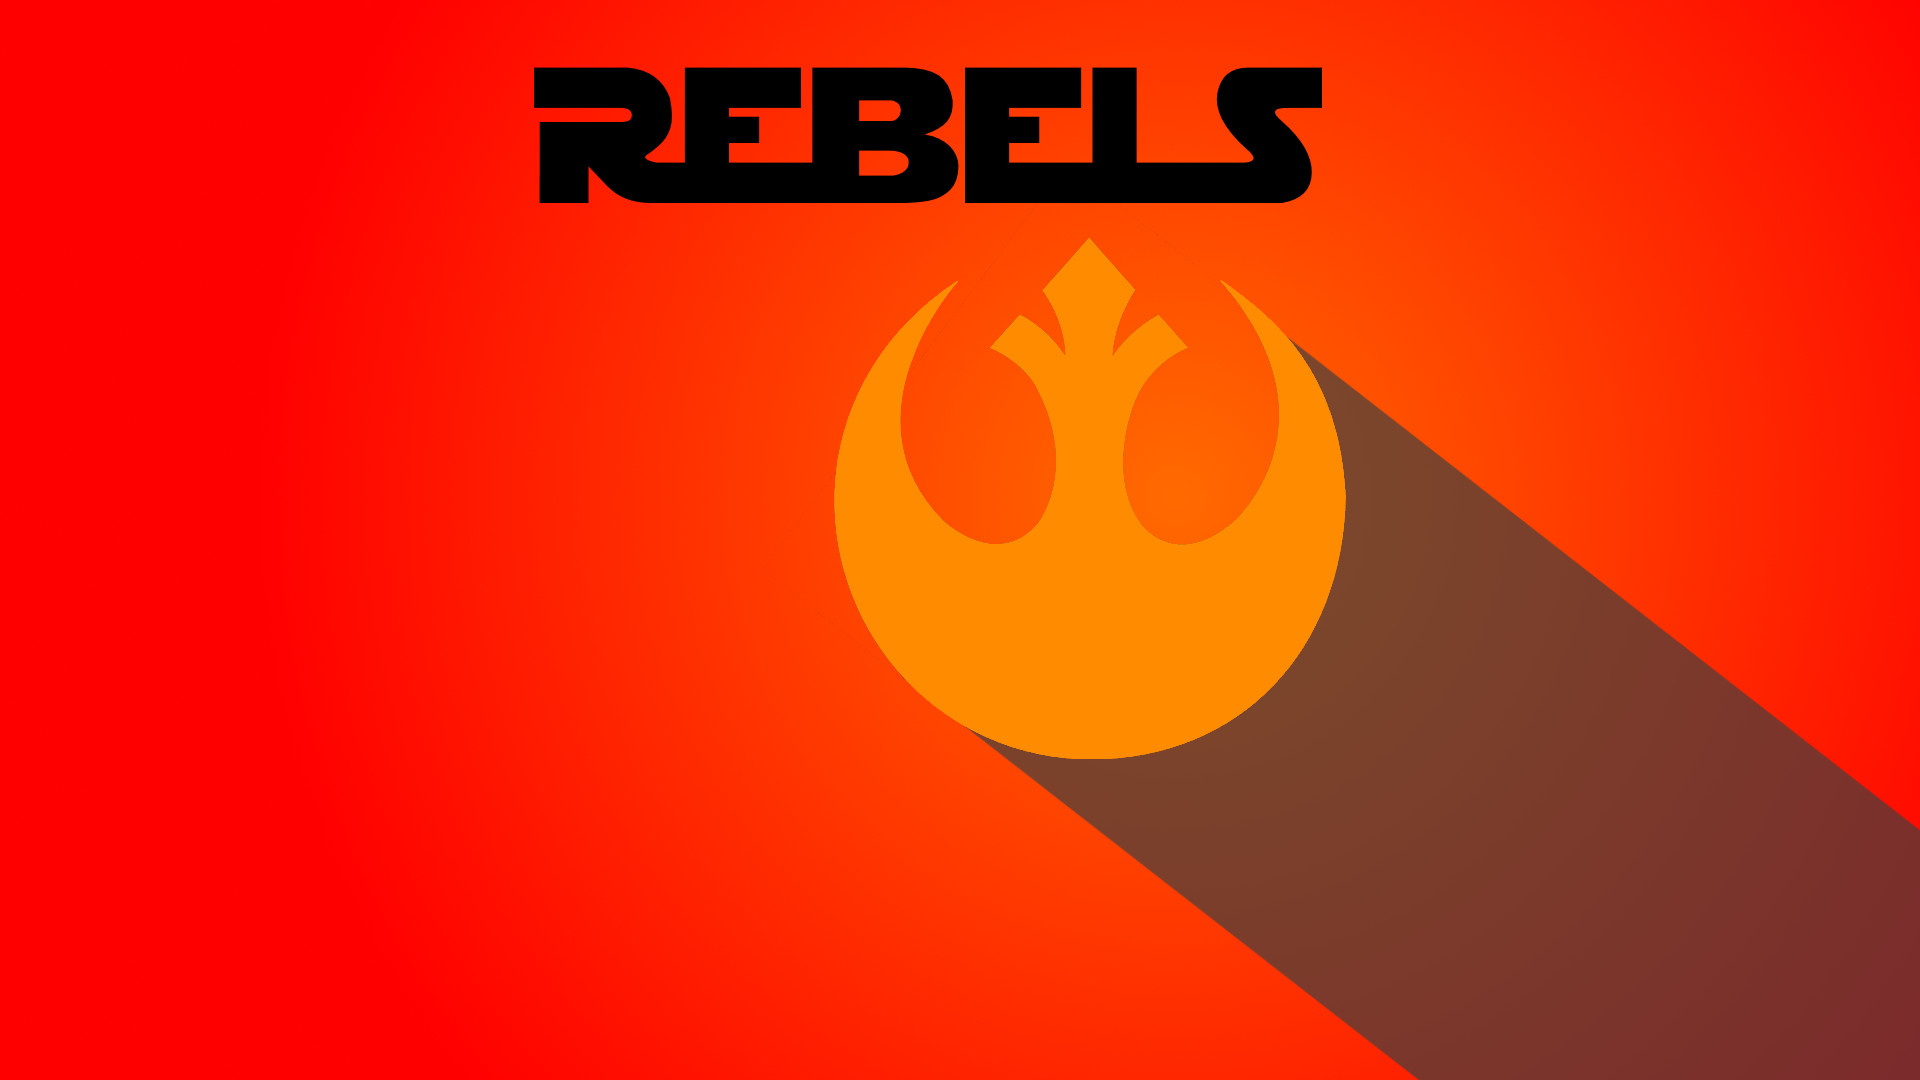 Star Wars Rebels Wallpaper by BiloBoy Star Wars Rebels Wallpaper by BiloBoy